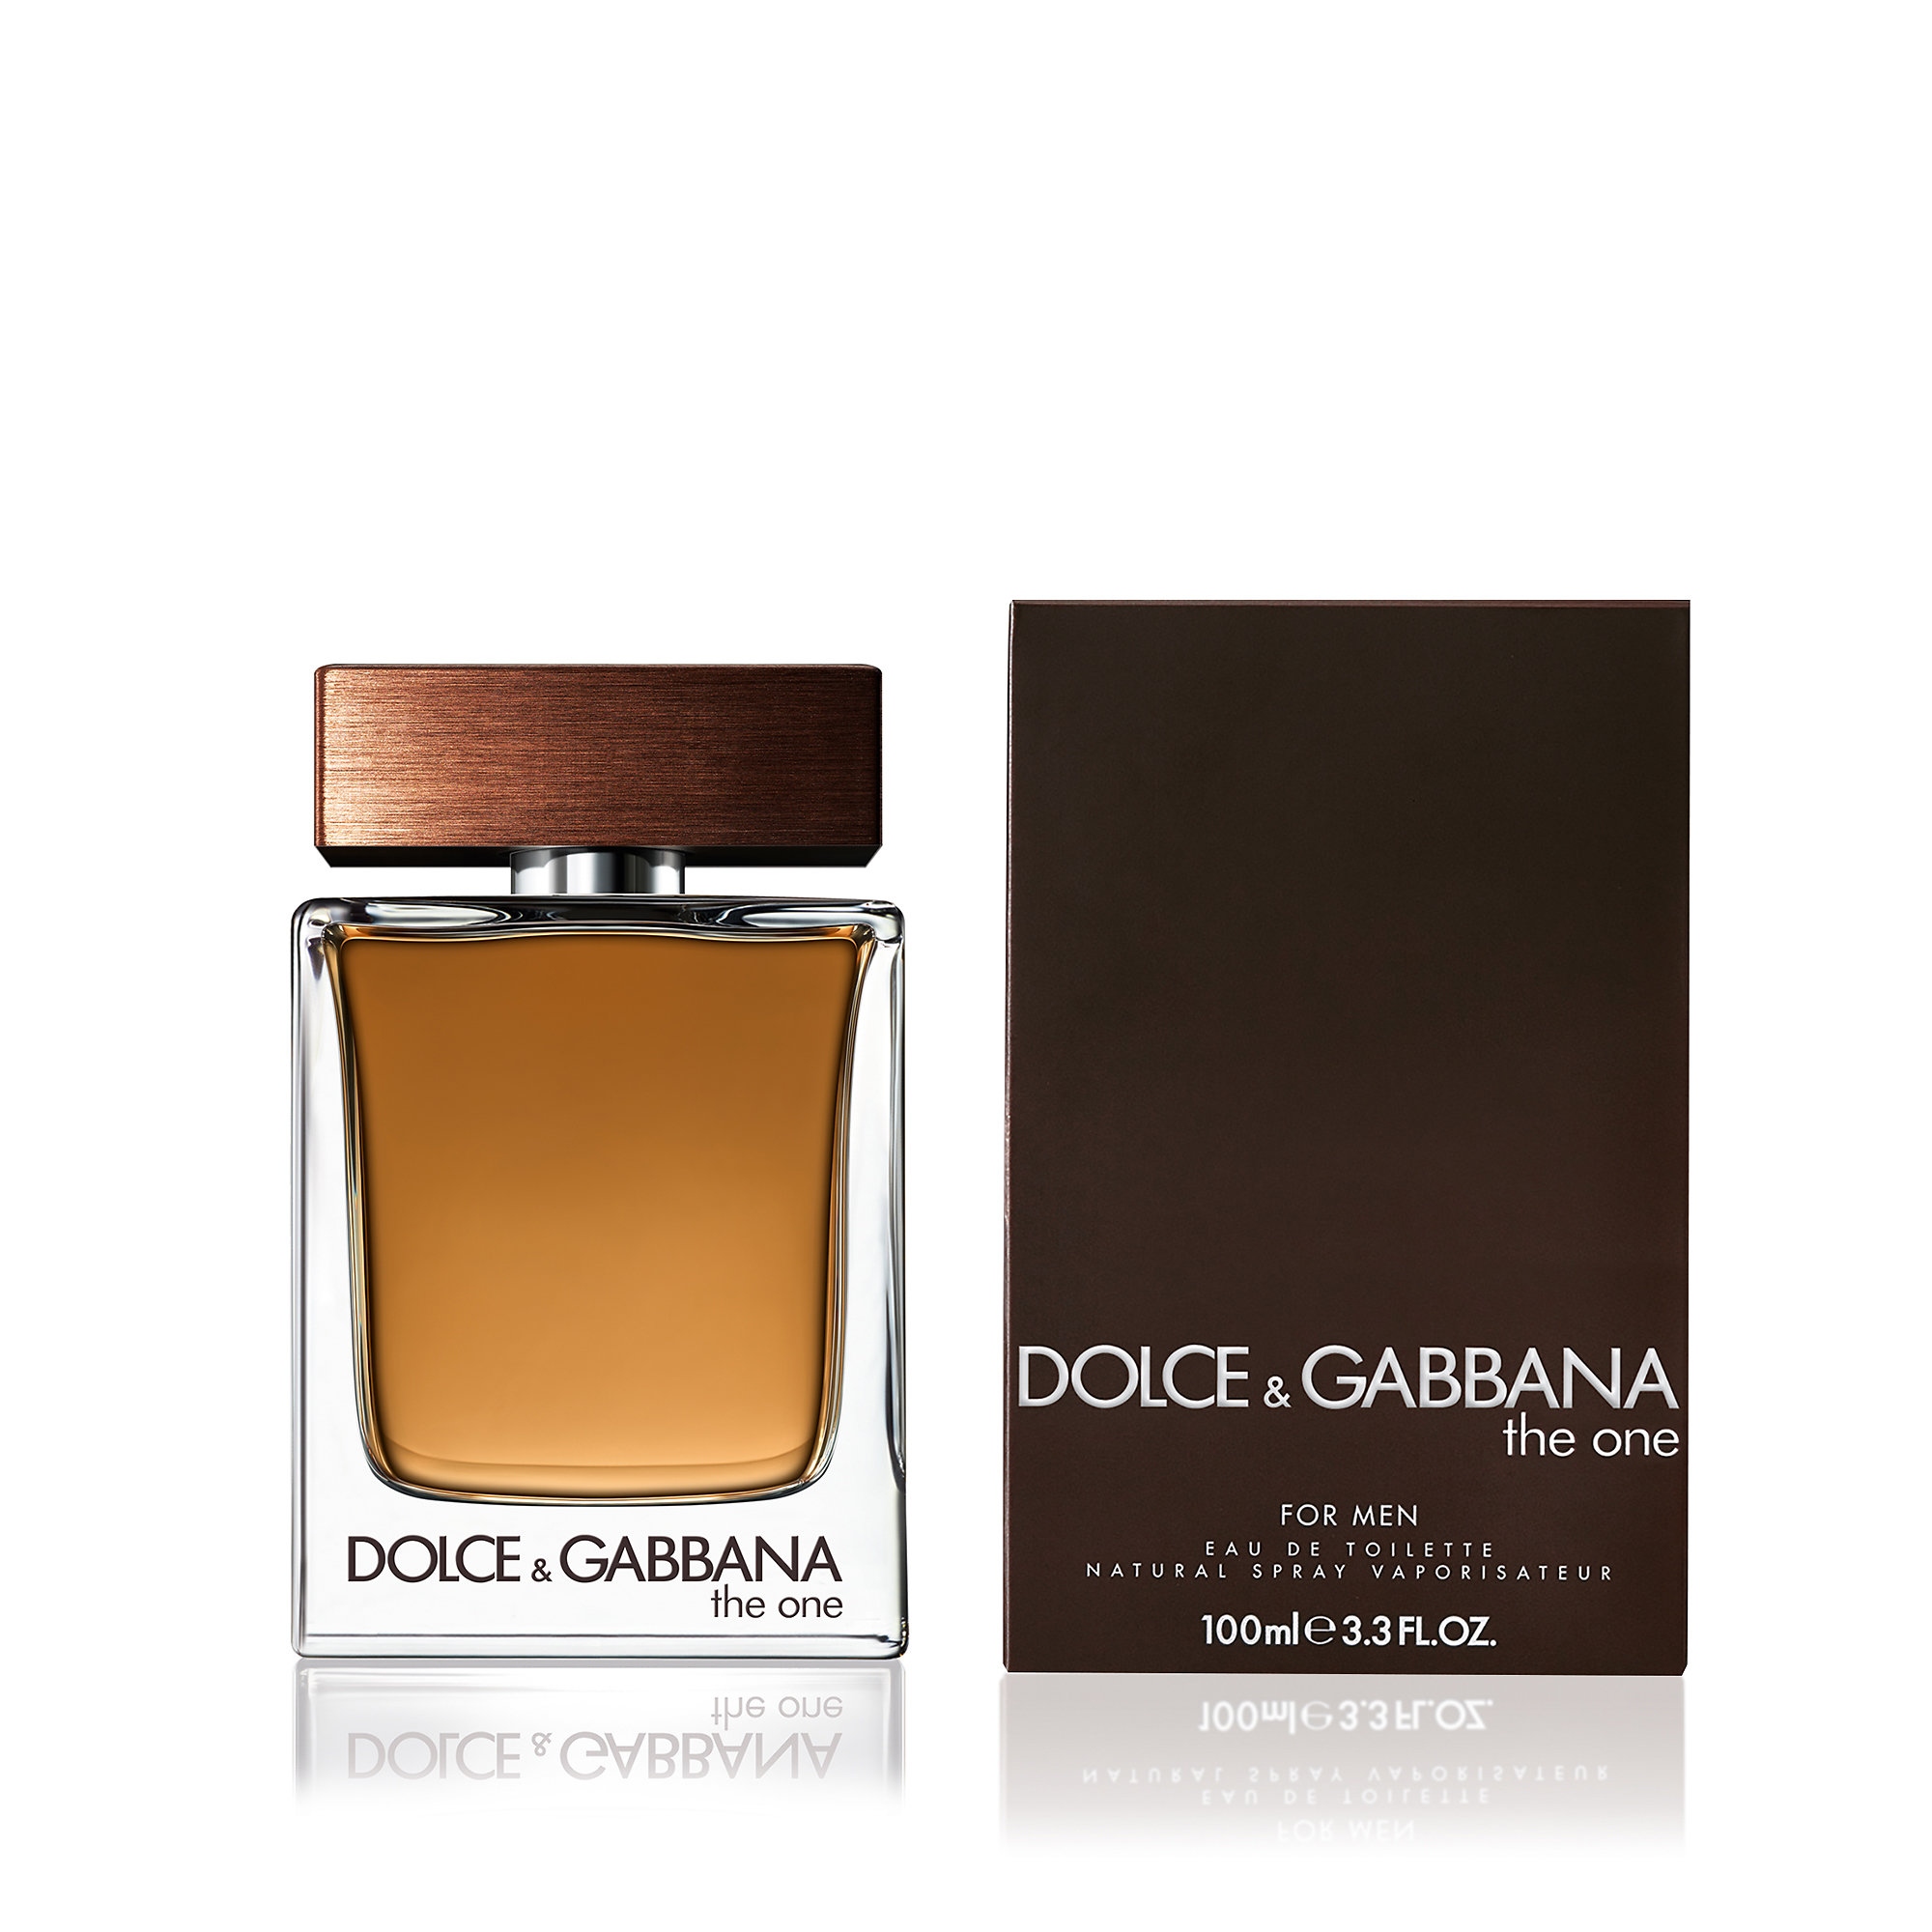 Купить Туалетная вода Dolce & Gabbana, Dolce & Gabbana The One For Men Eau De Toilette 100ml, Италия